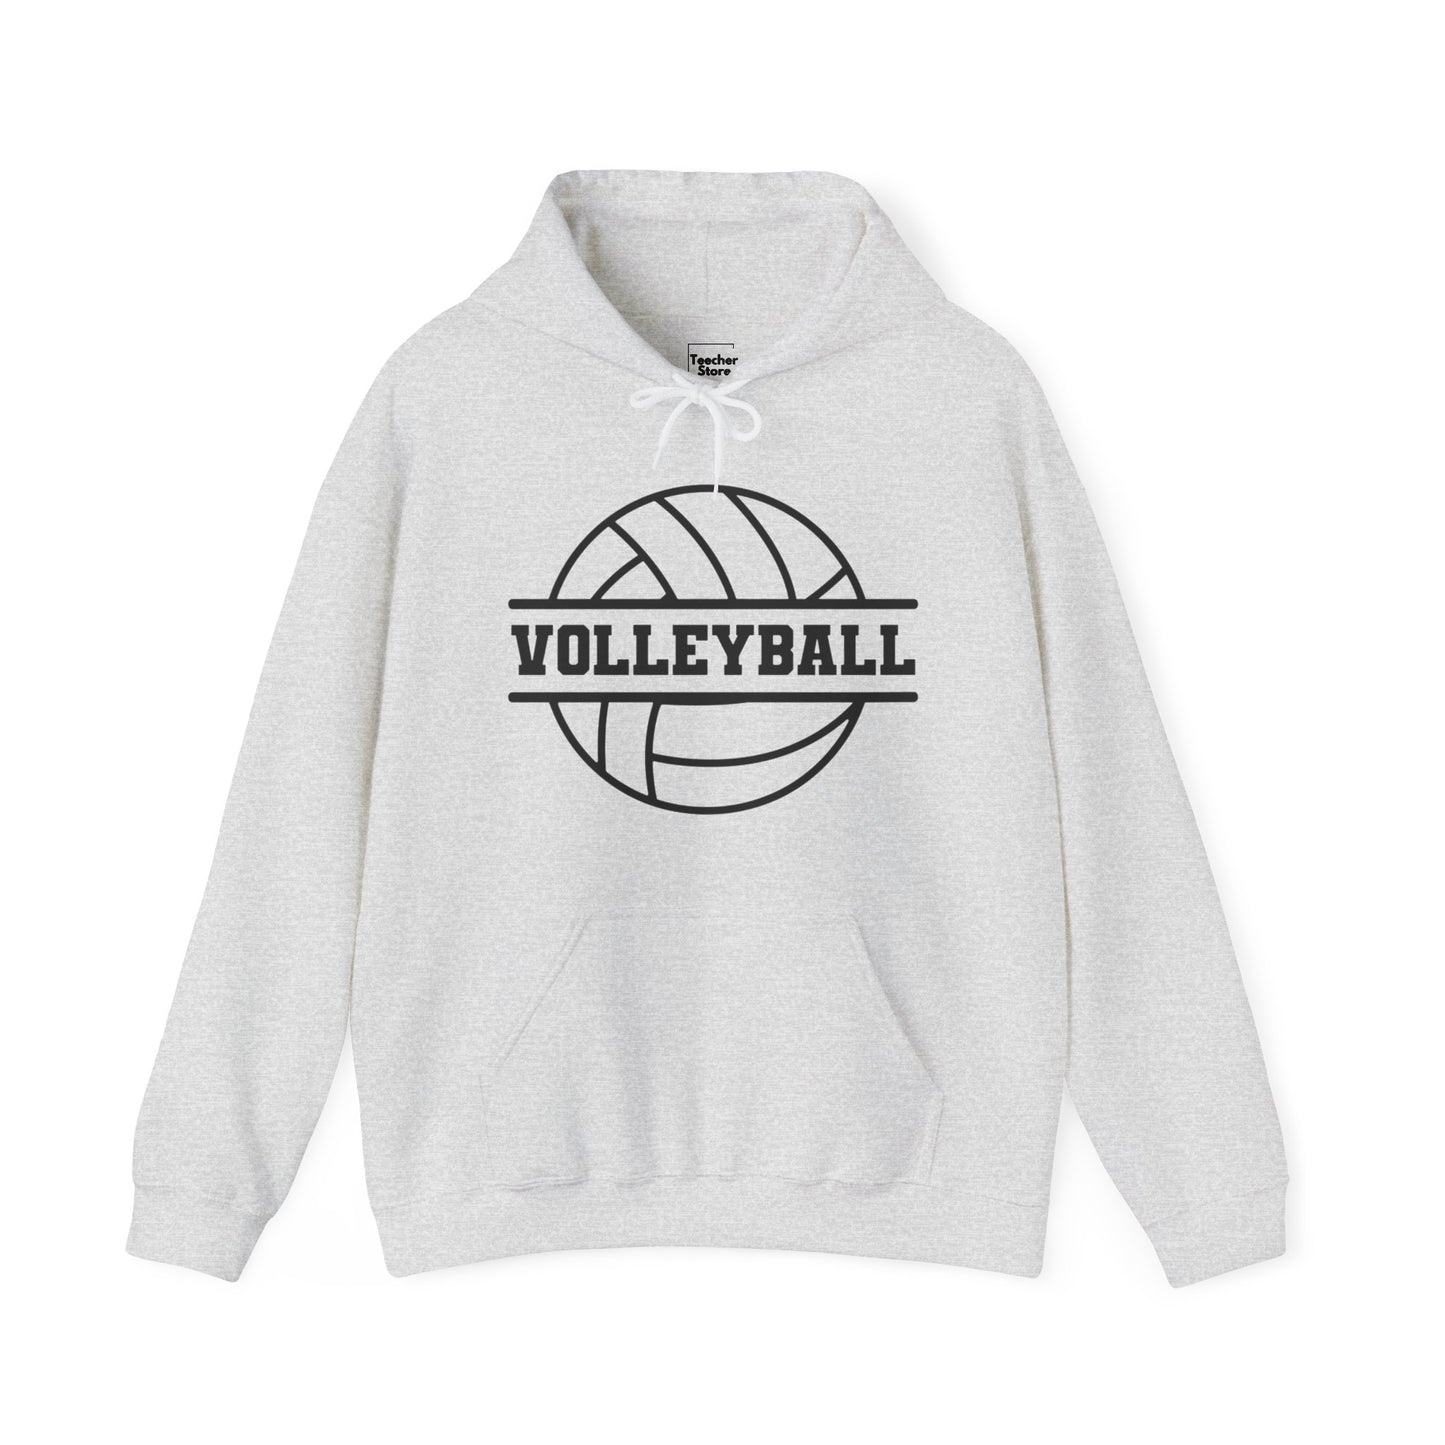 Volleyball Hooded Sweatshirt